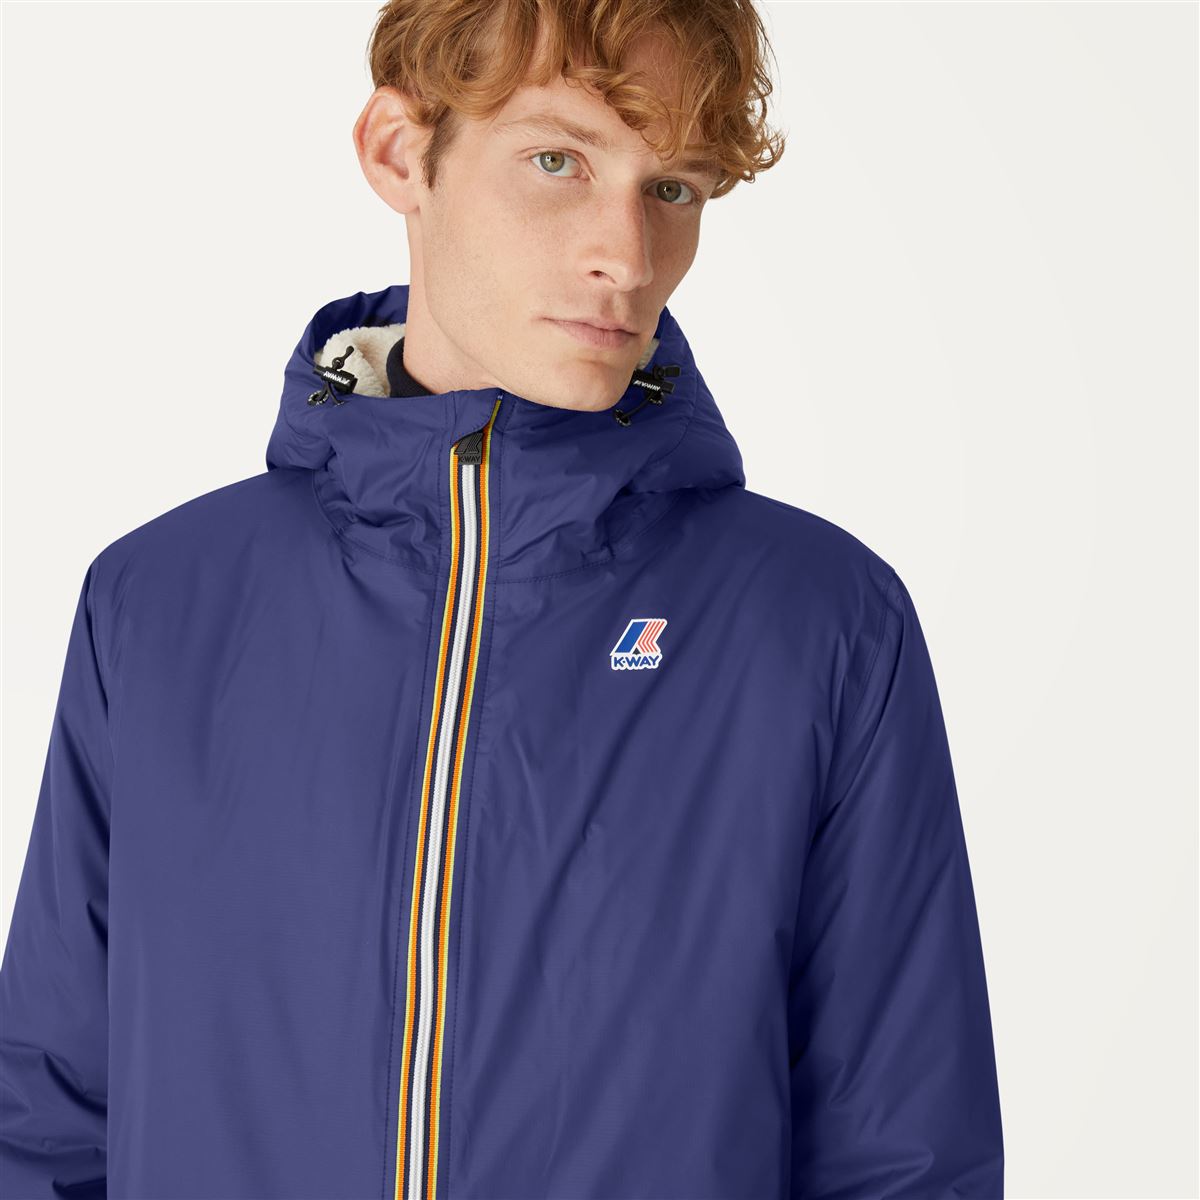 Claude Orsetto - Unisex Sherpa Lined Waterproof Full Zip Rain Jacket in Blue Medieval